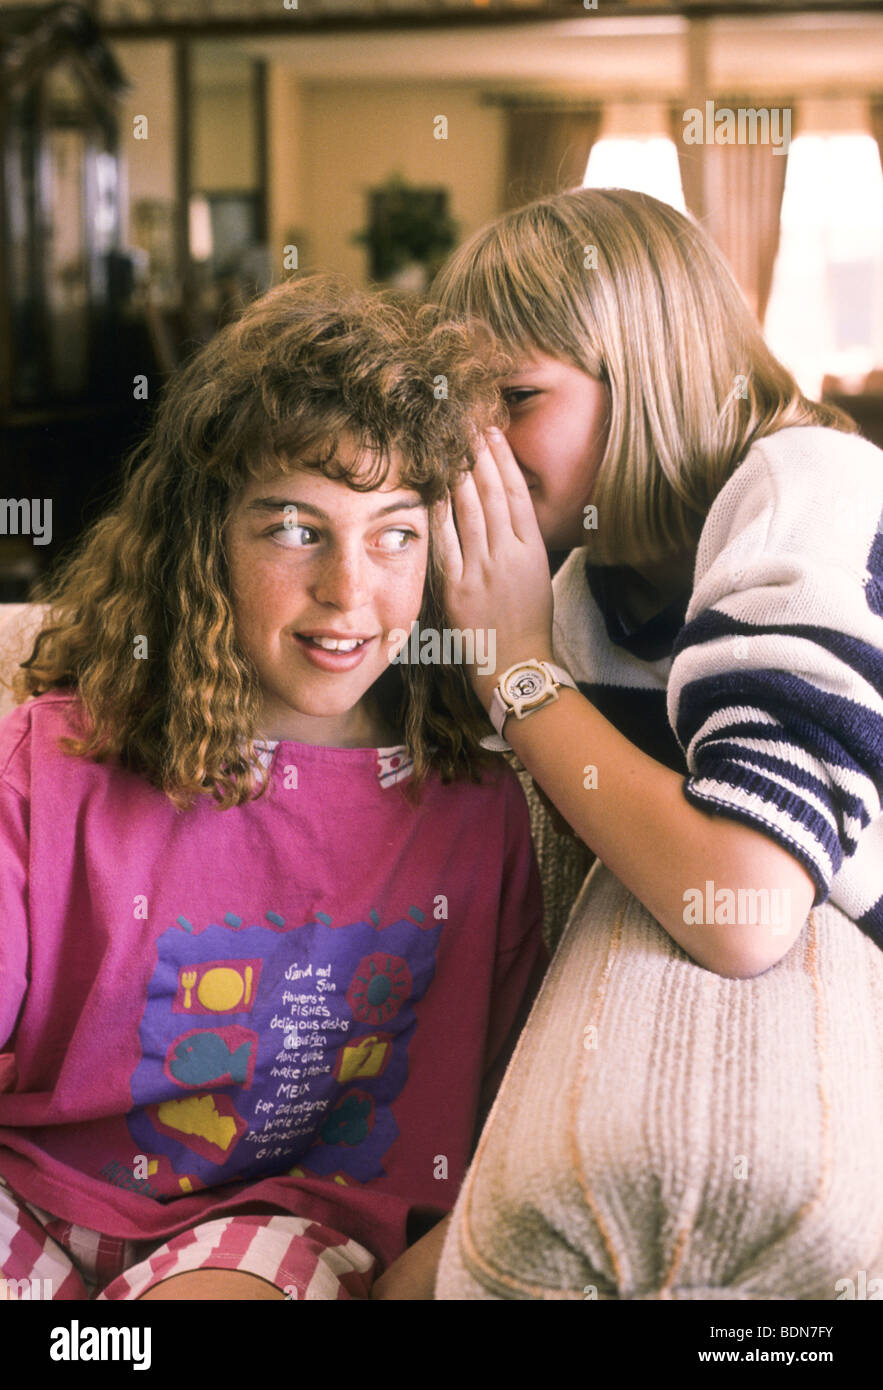 pre-teen teen female blond confide talk whisper share support Stock Photo